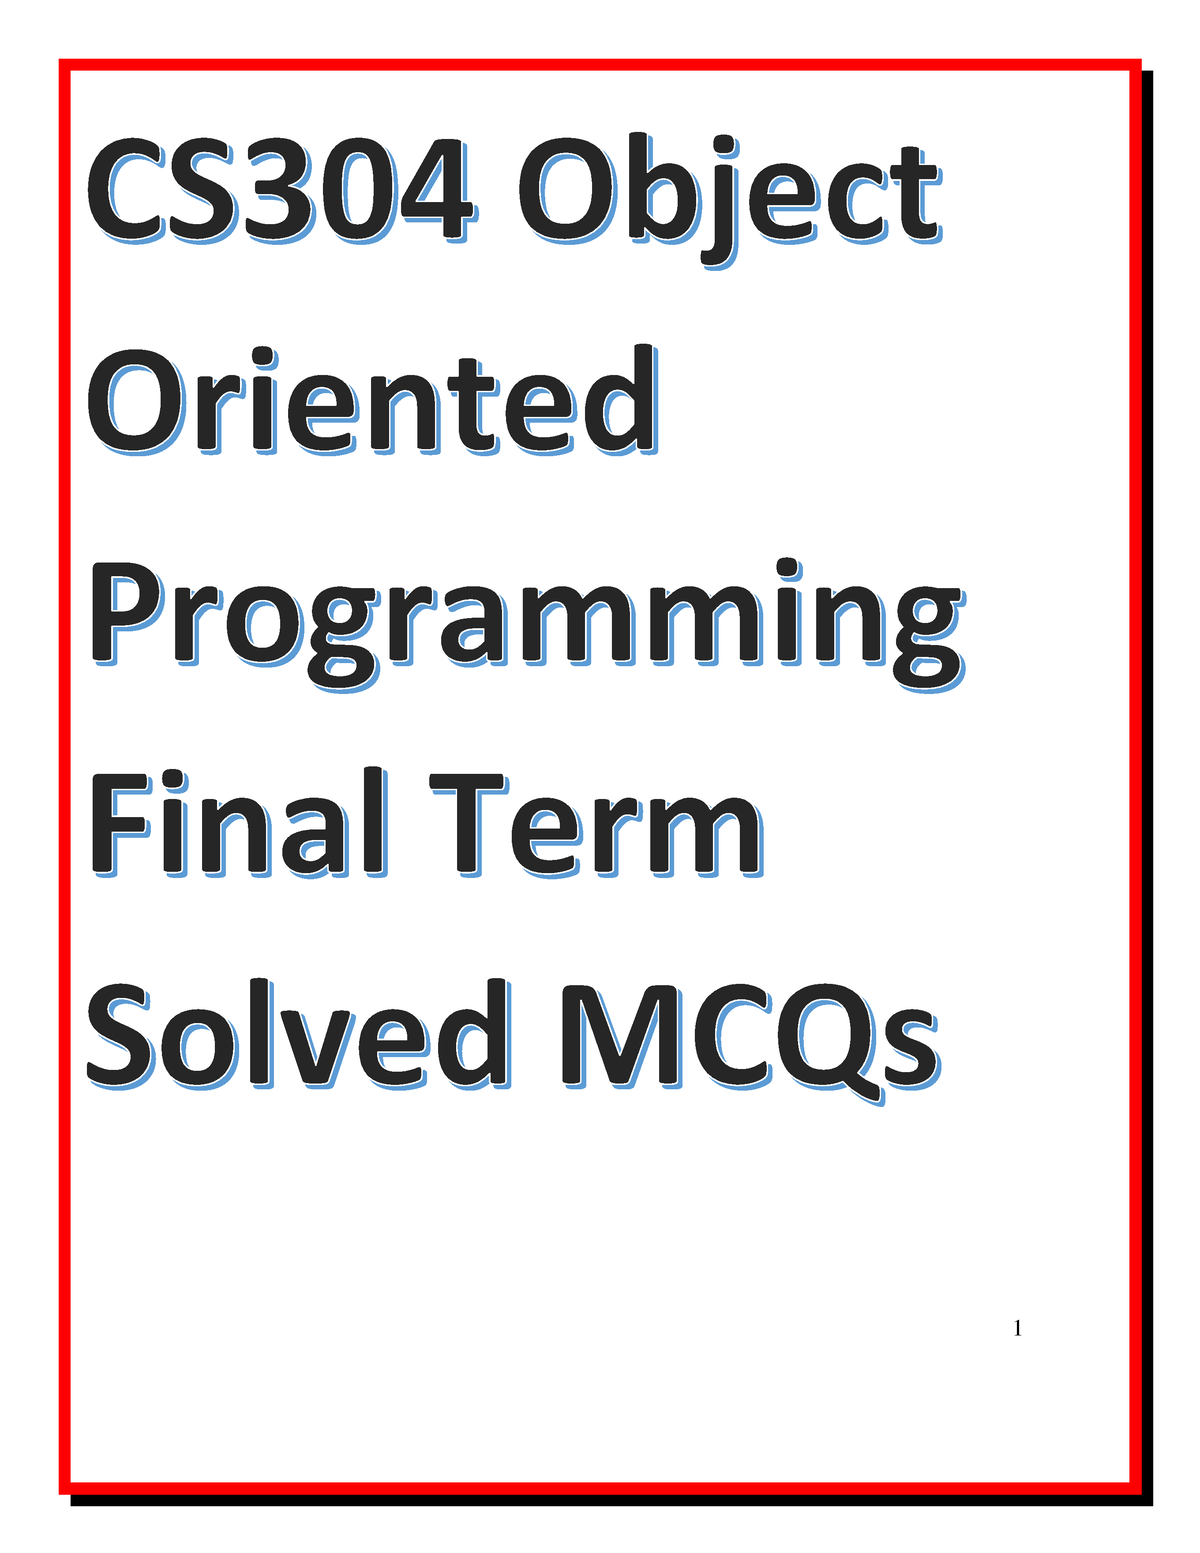 CS201 Mcq's Final Term By Vu Topper RM - CS-201 Introduction To